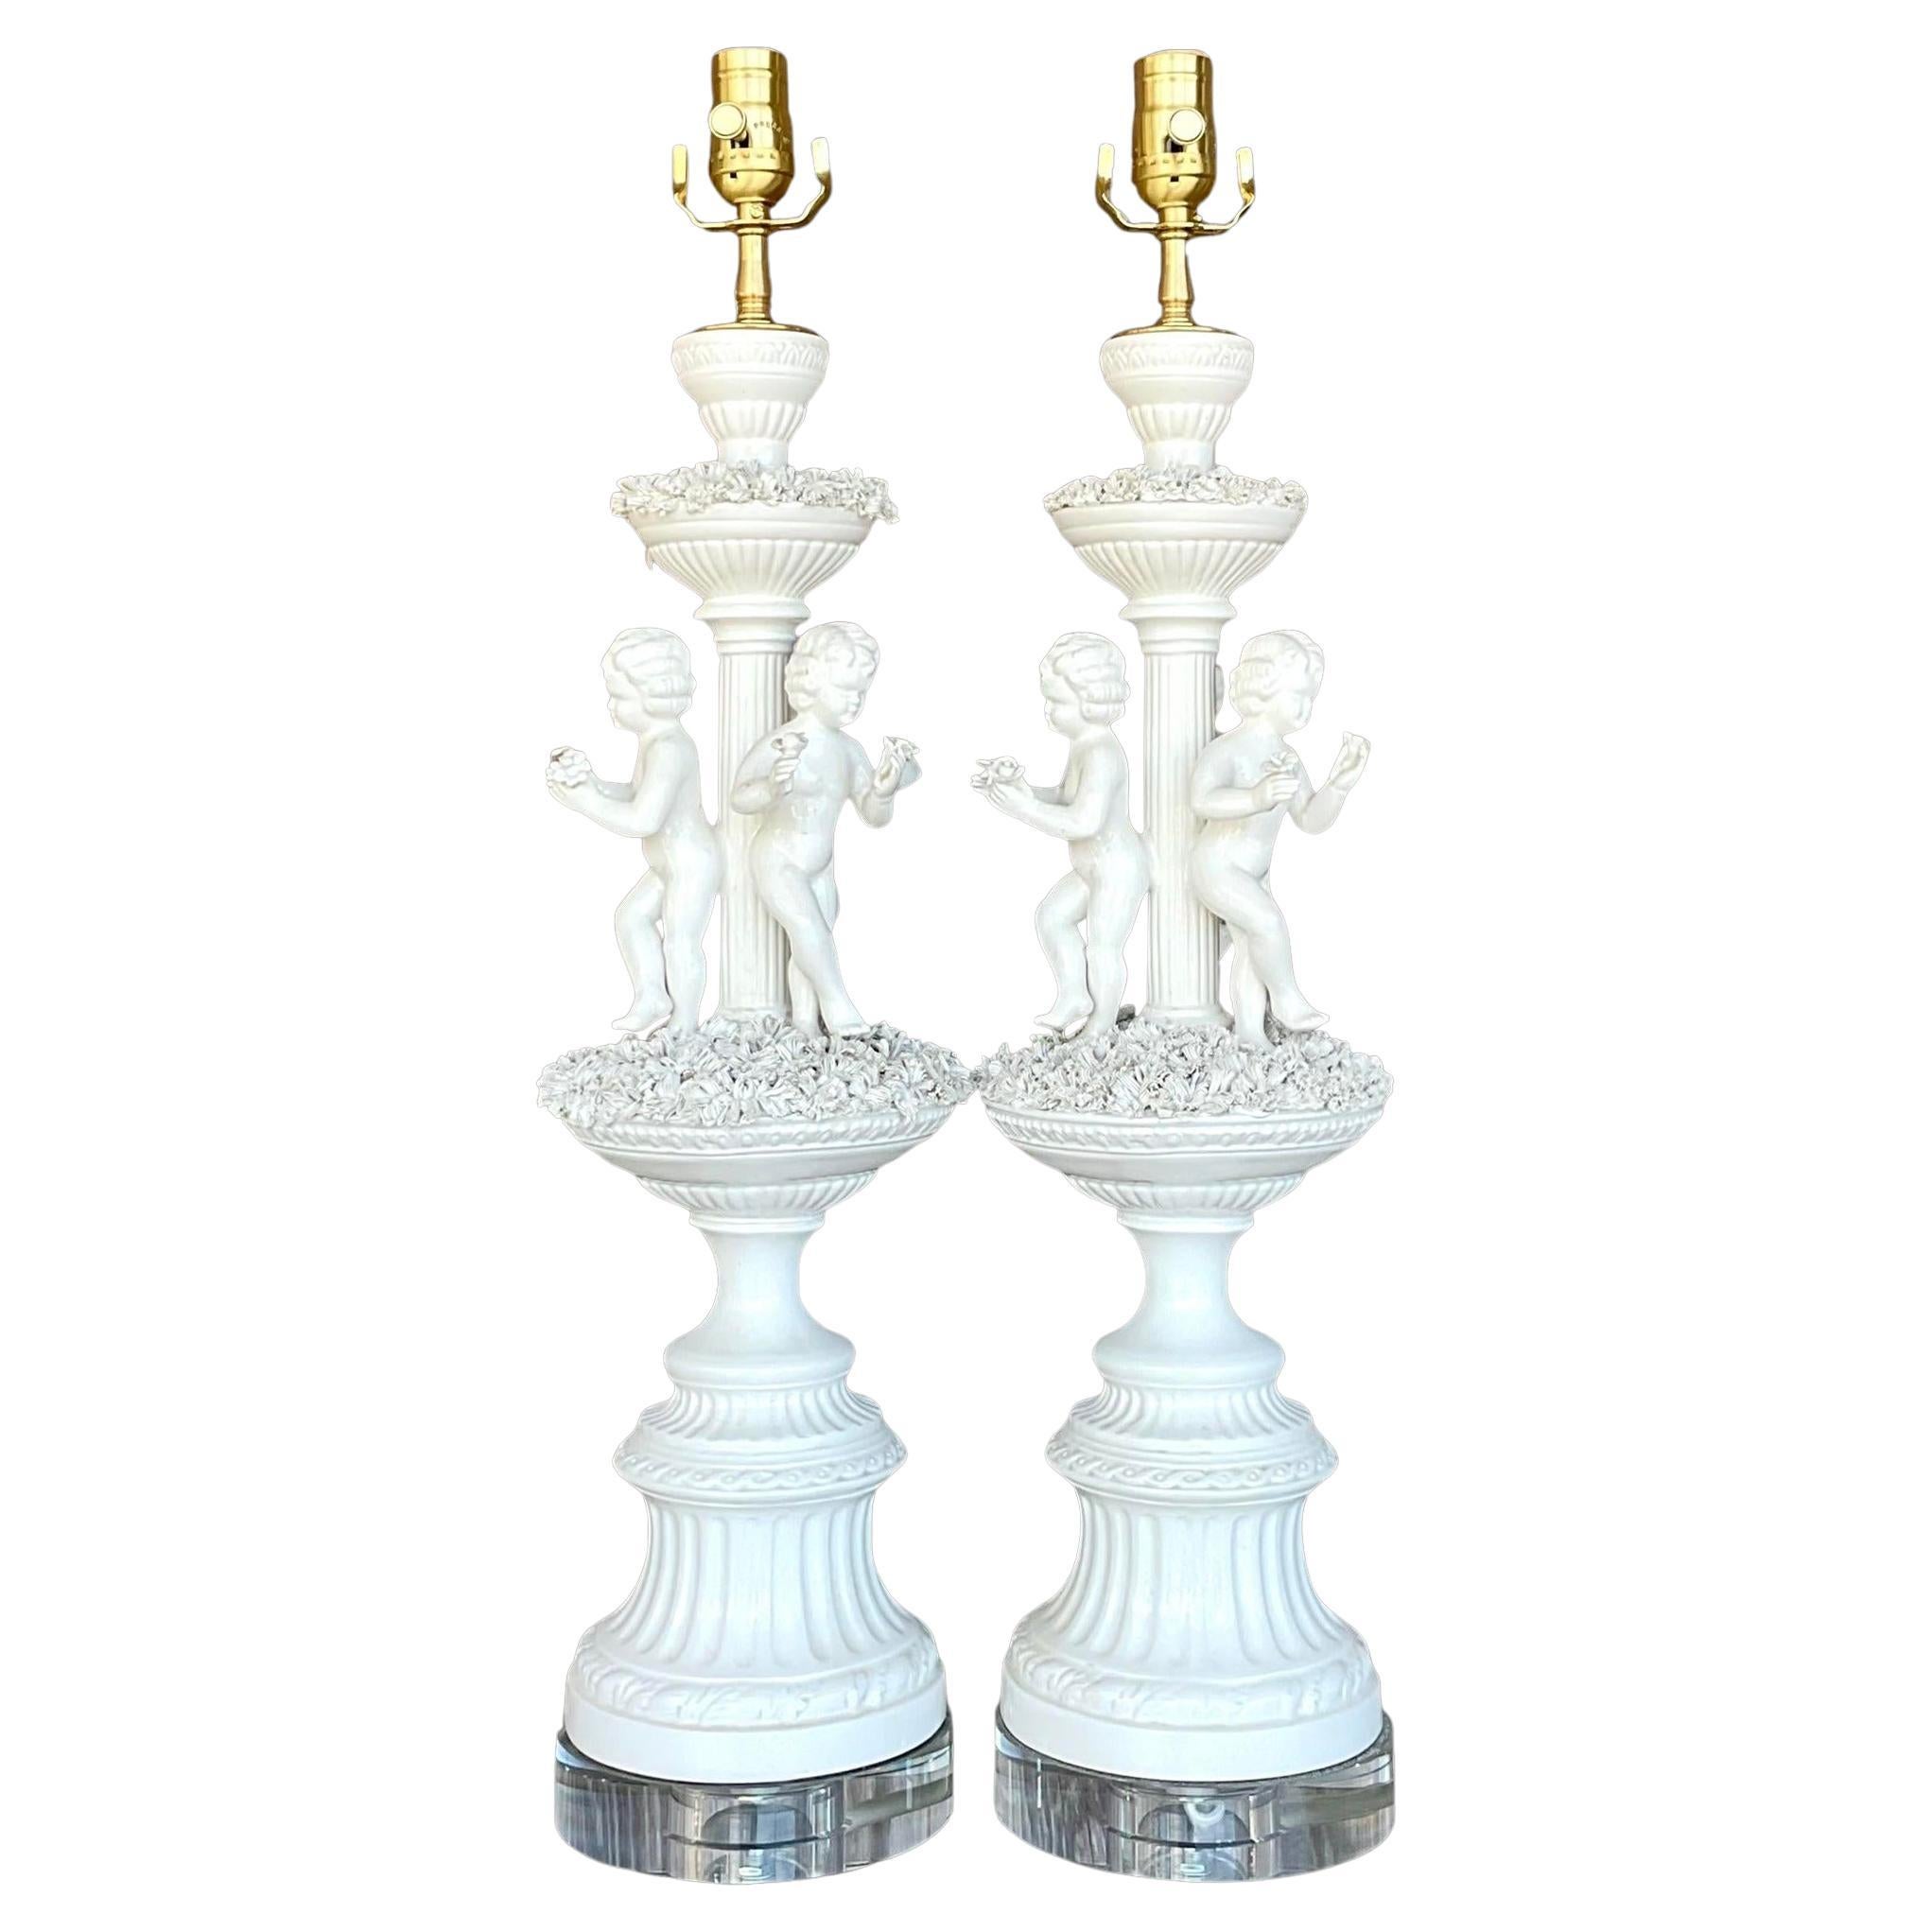 Vintage-Lampen im Regency-Stil aus glasierter Keramik im Puttenstil, Paar